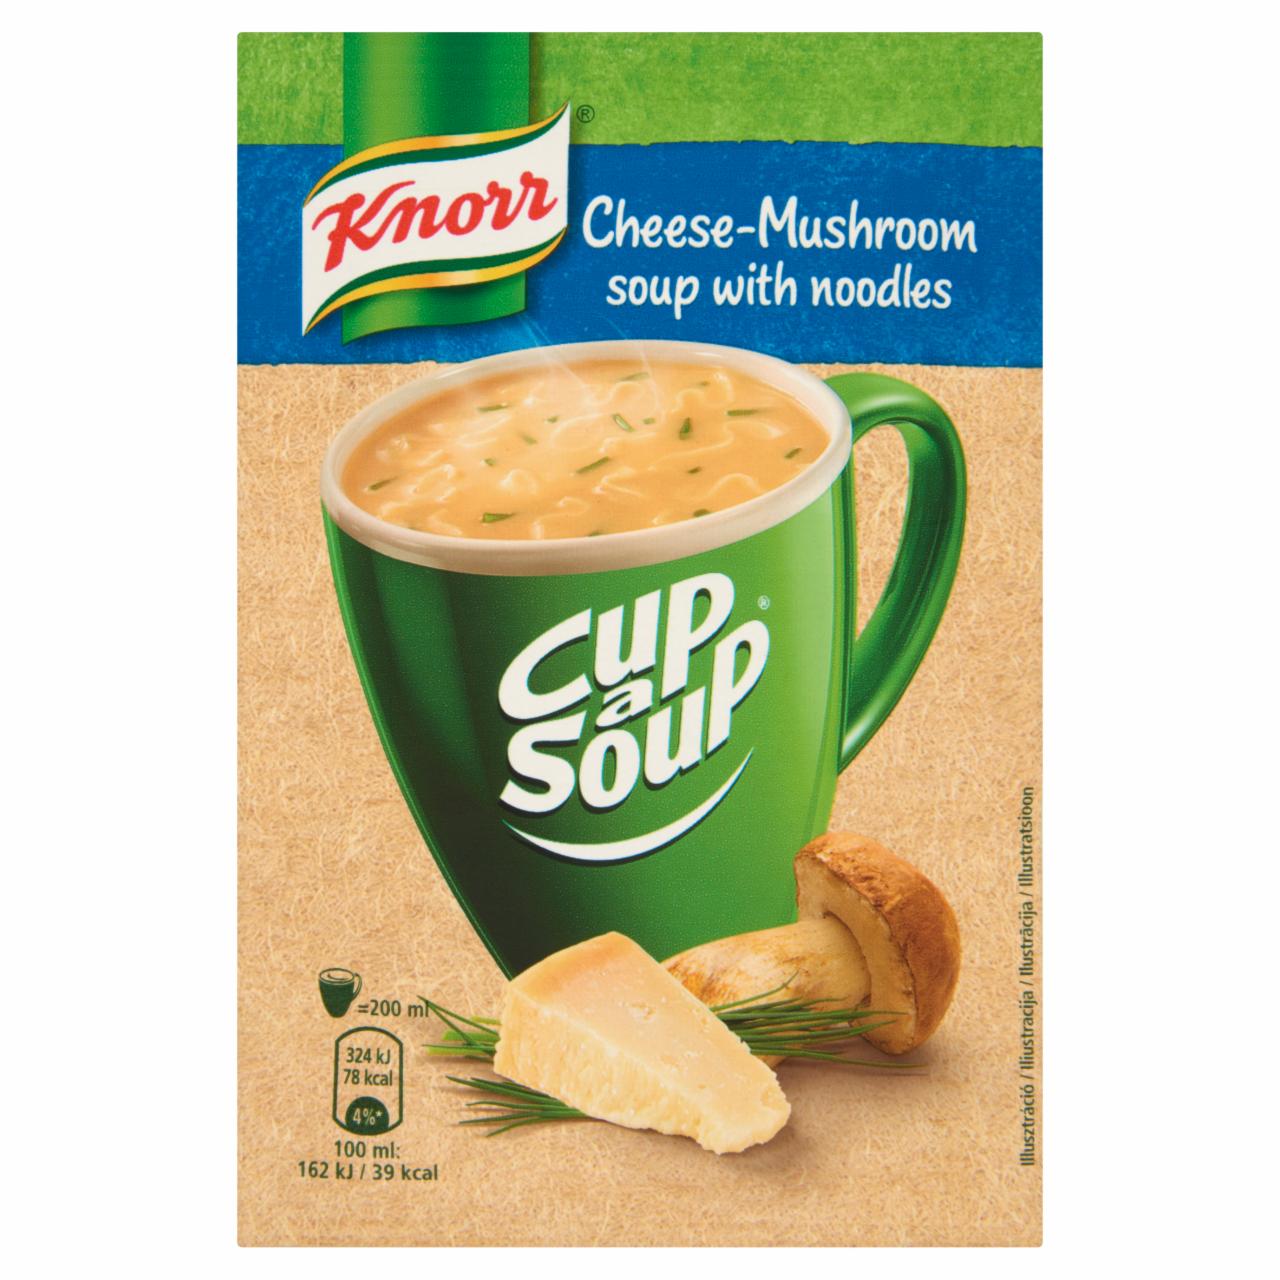 Képek - Knorr Cup a Soup sajtos gombakrémleves 17 g